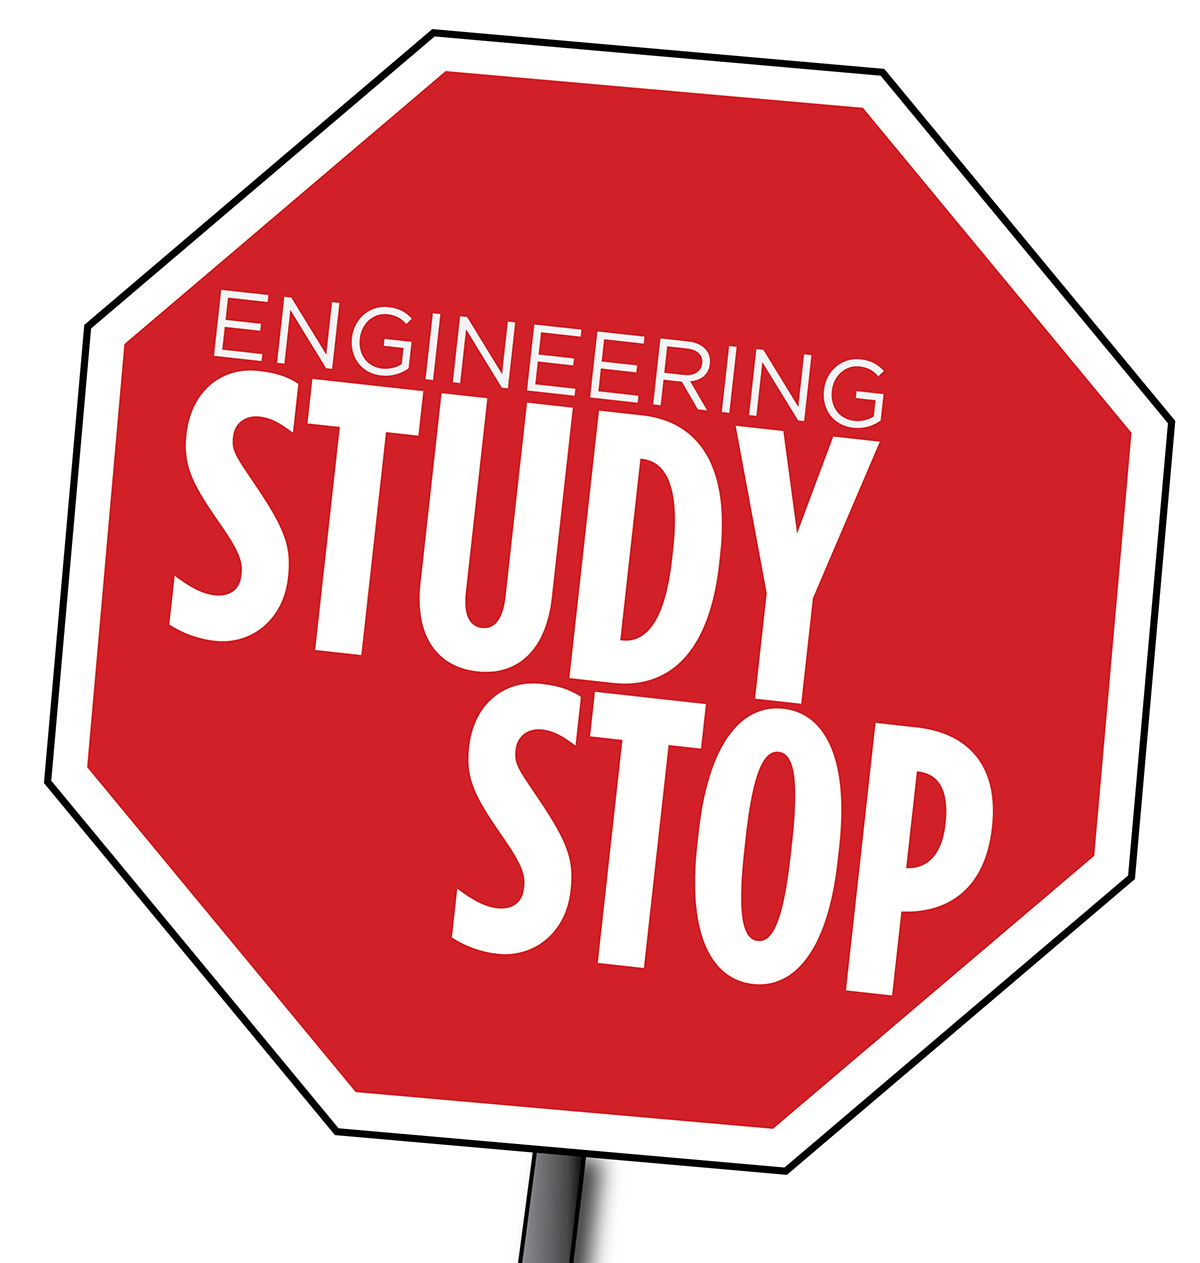 ESS is seeking student tutors for Engineering Study Stop.